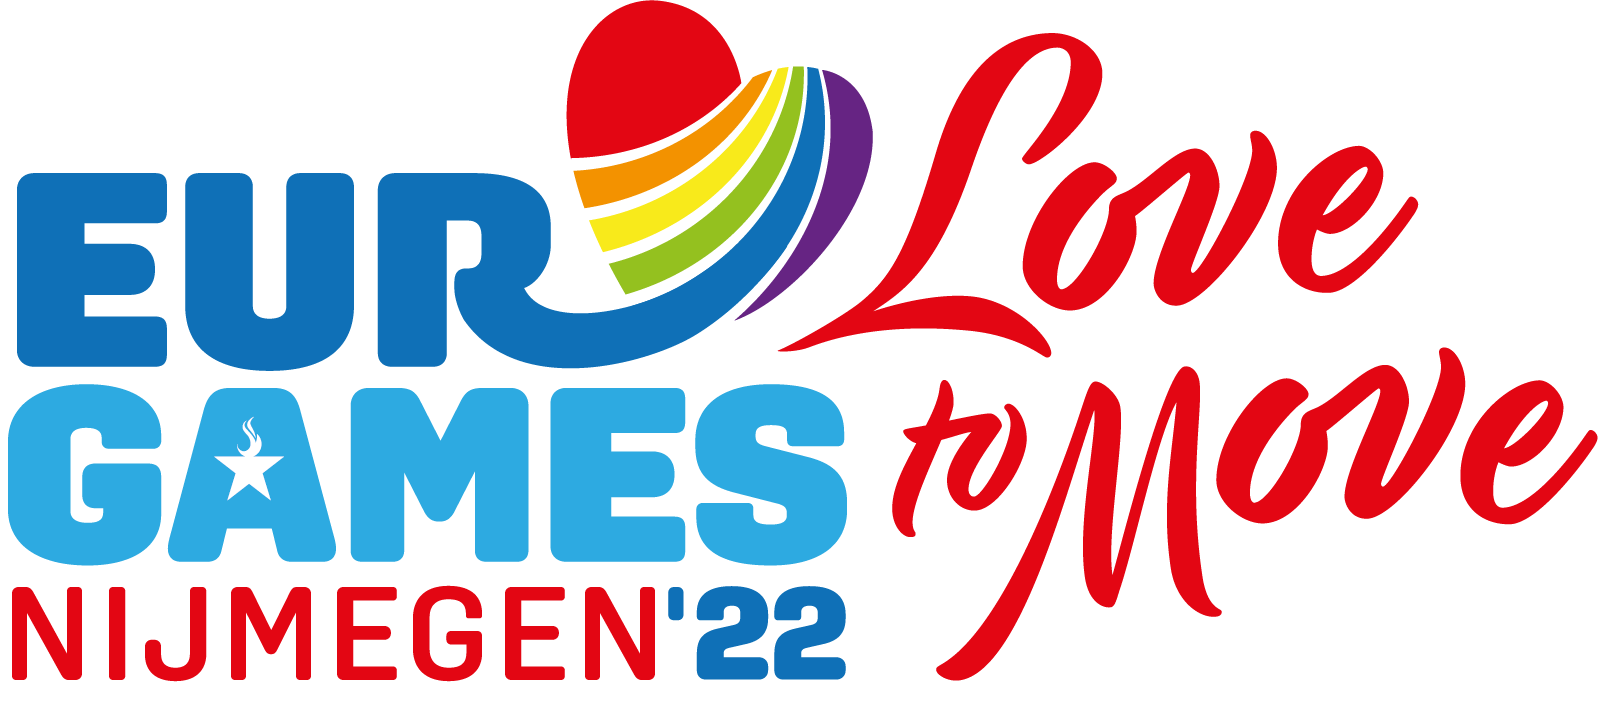 EuroGames Nijmegen 2022